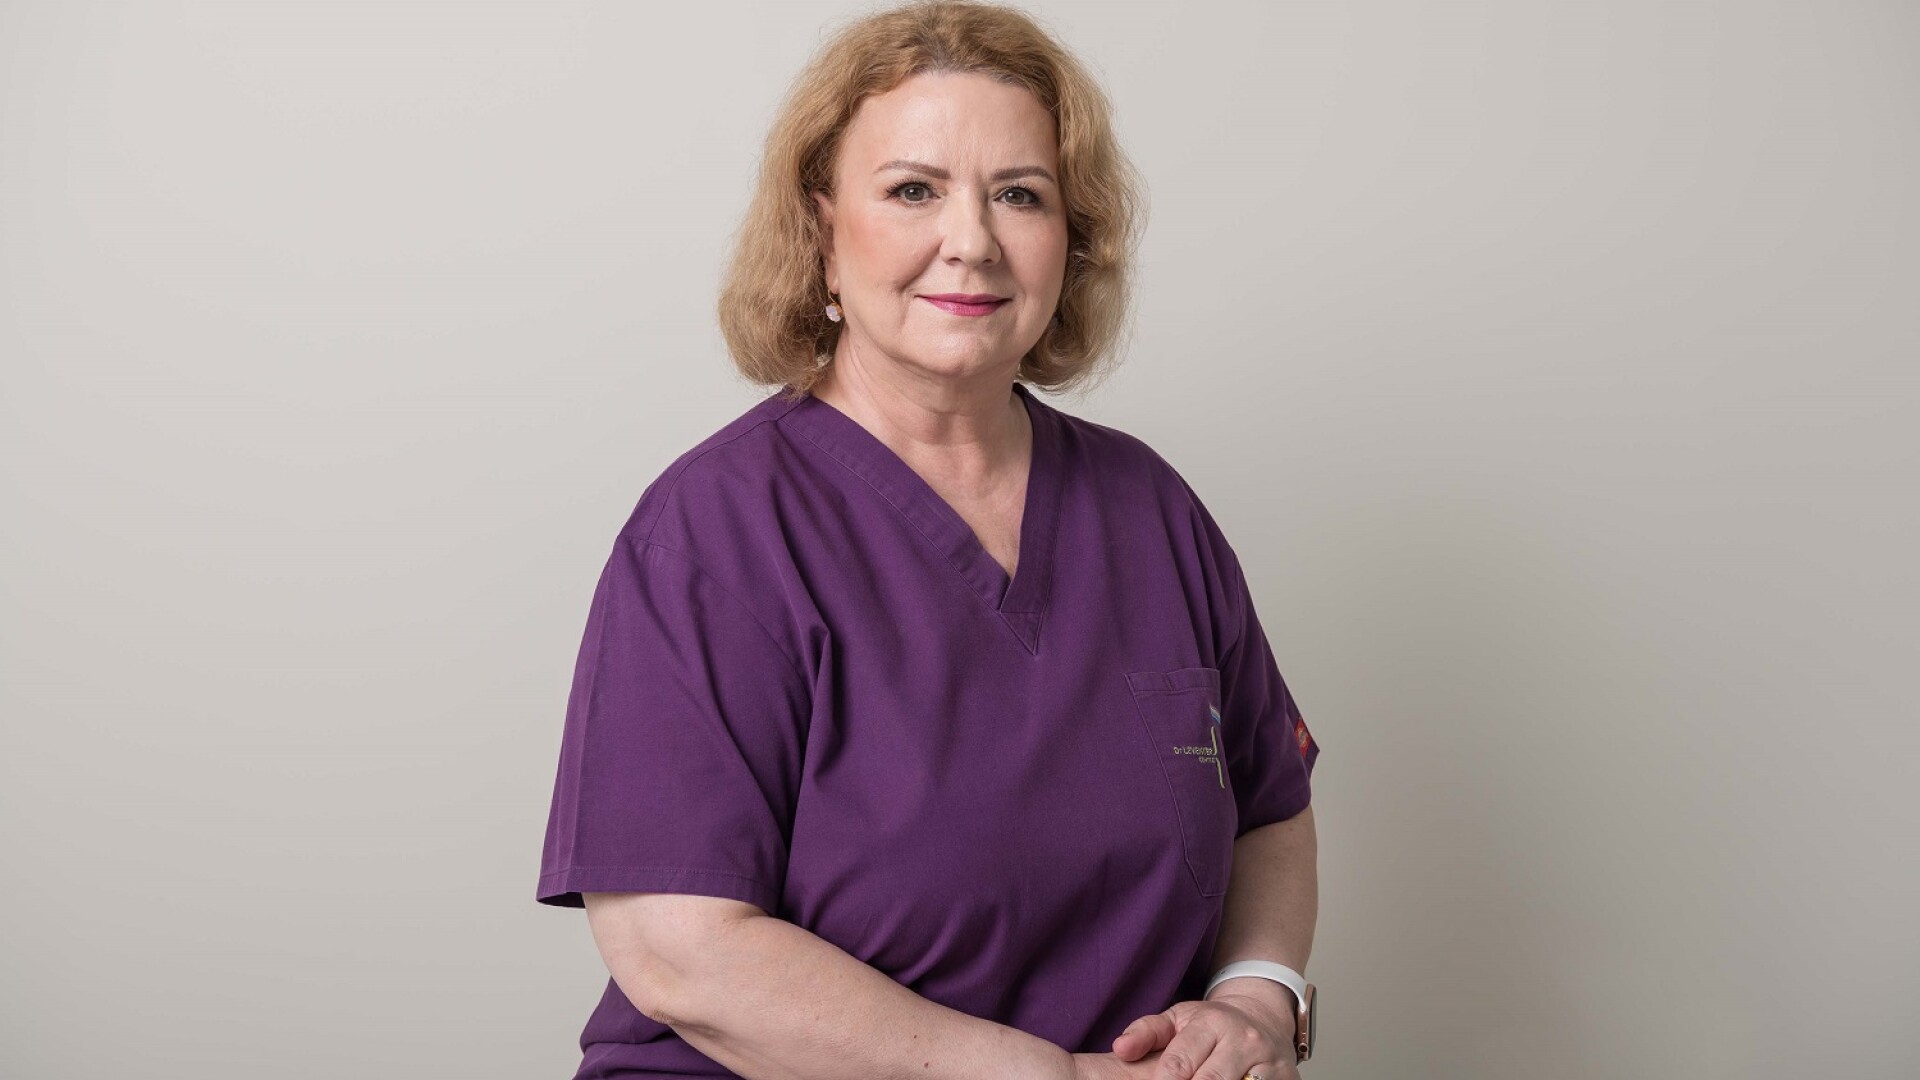 Dr. Mihaela Leventer